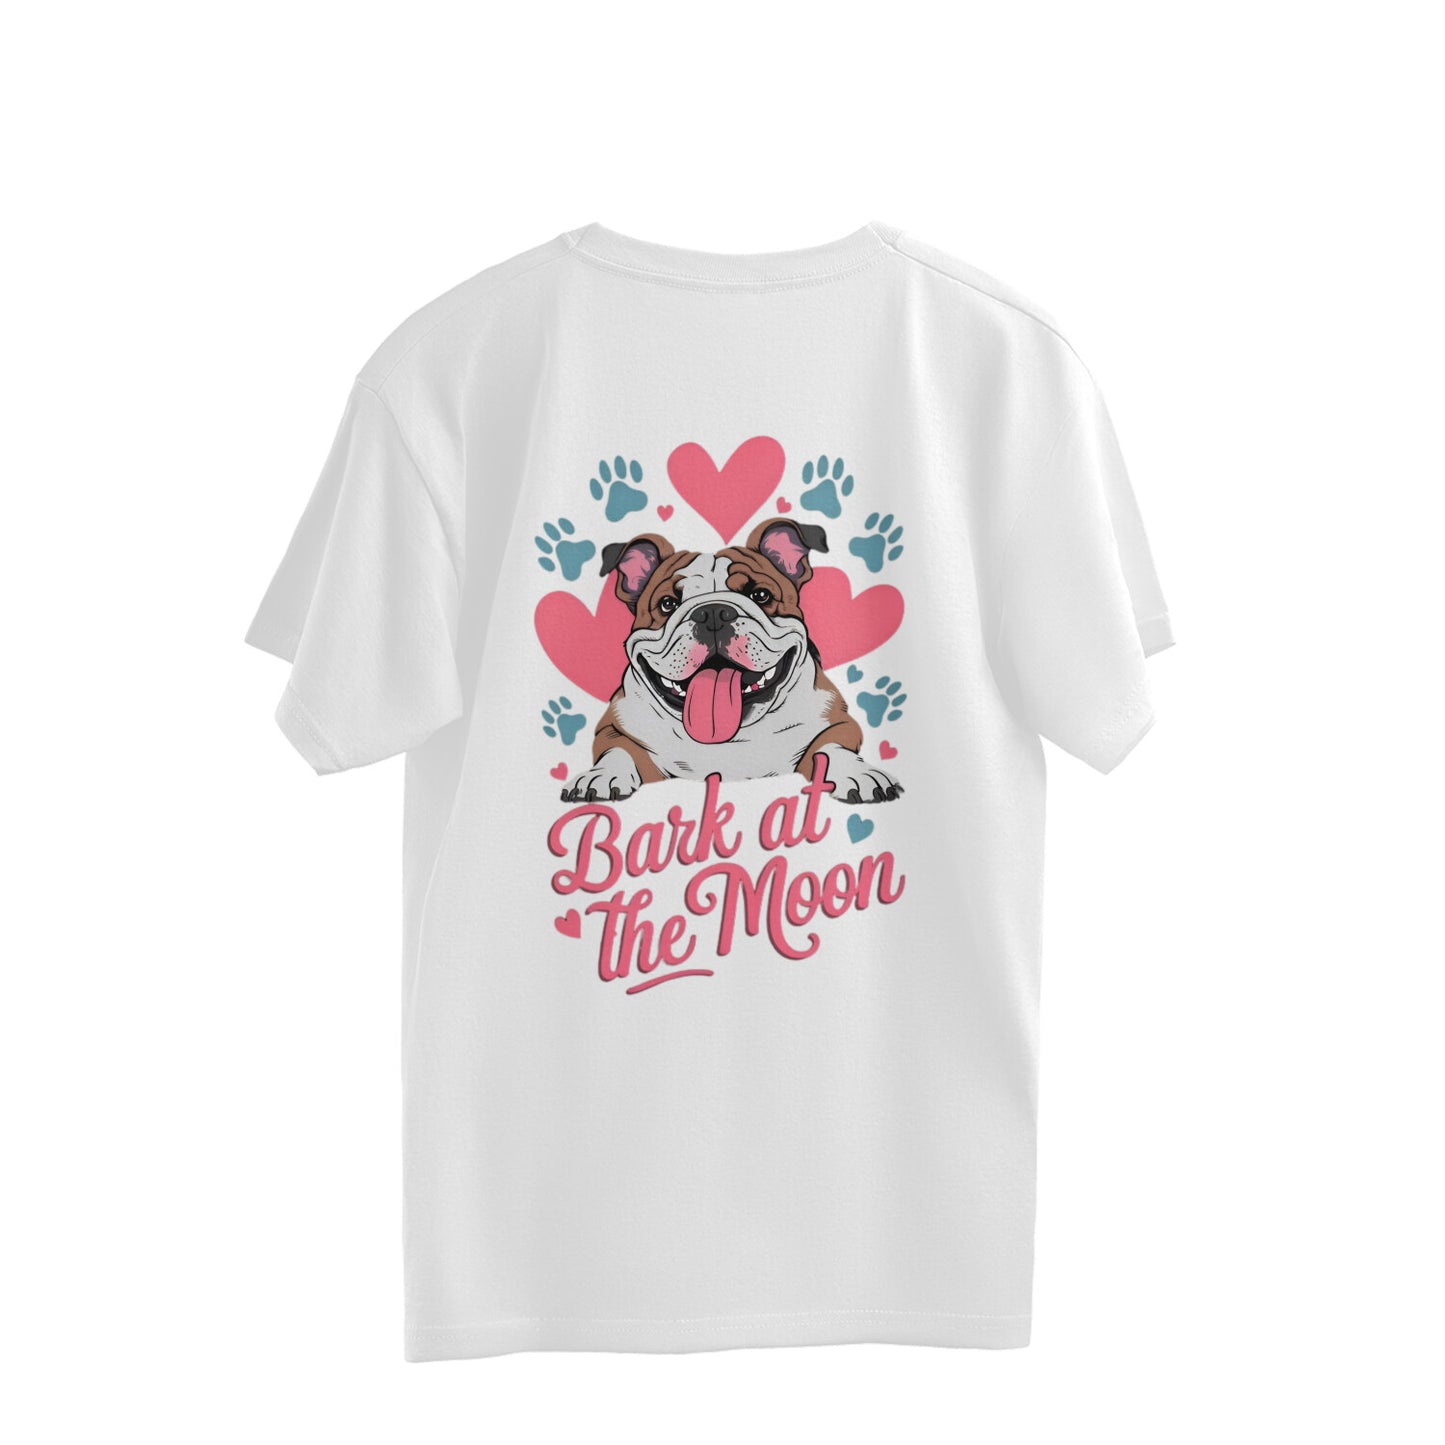 Dog Lover - Bark at the moon - Oversized T-shirt